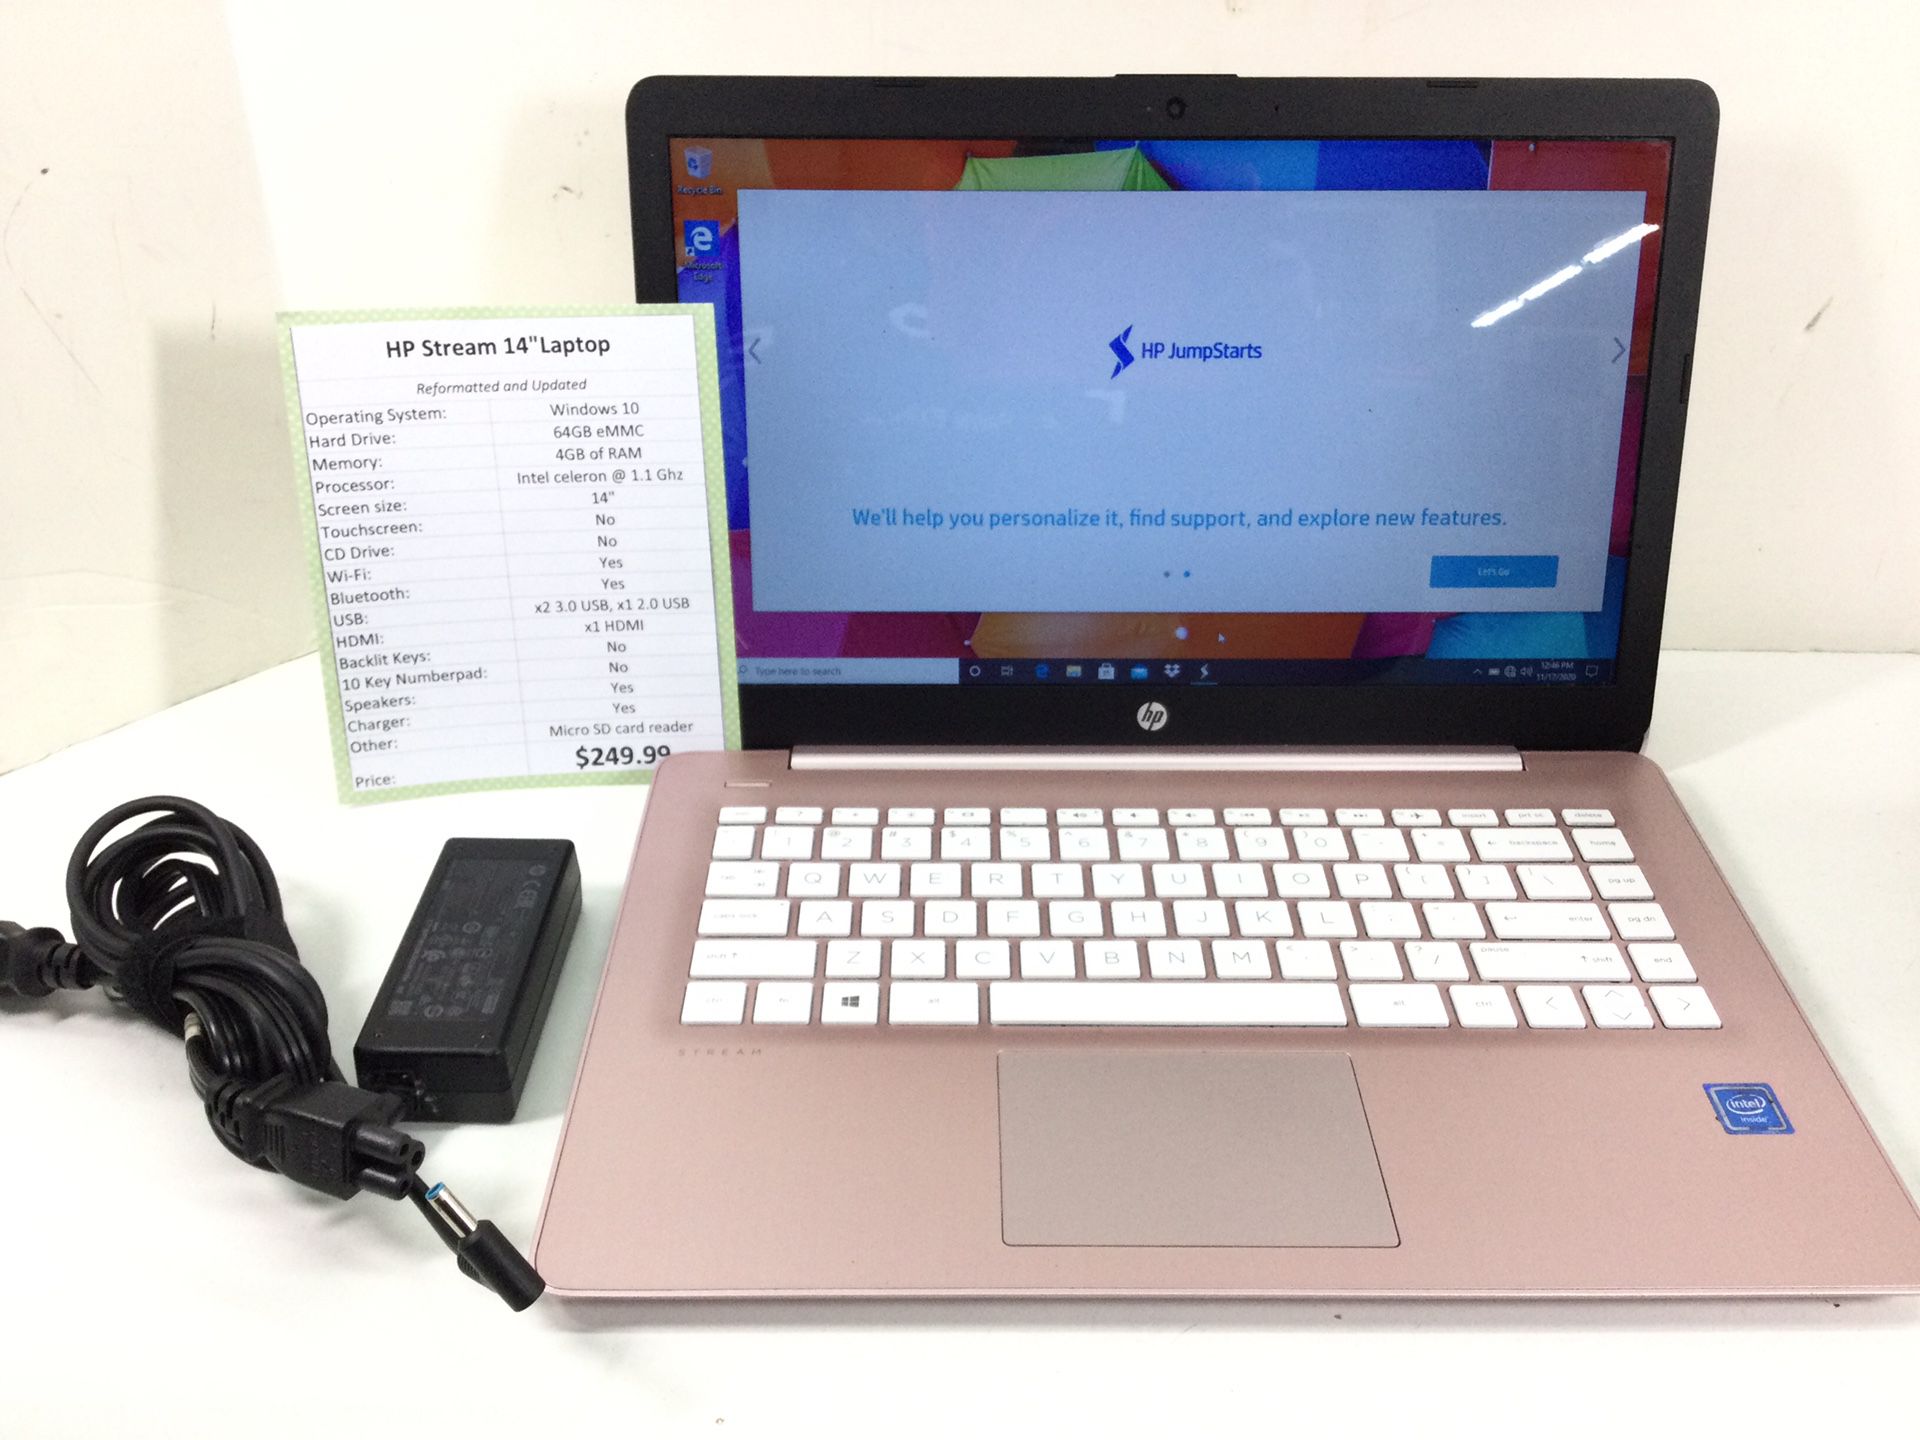 HP Stream 14” Laptop